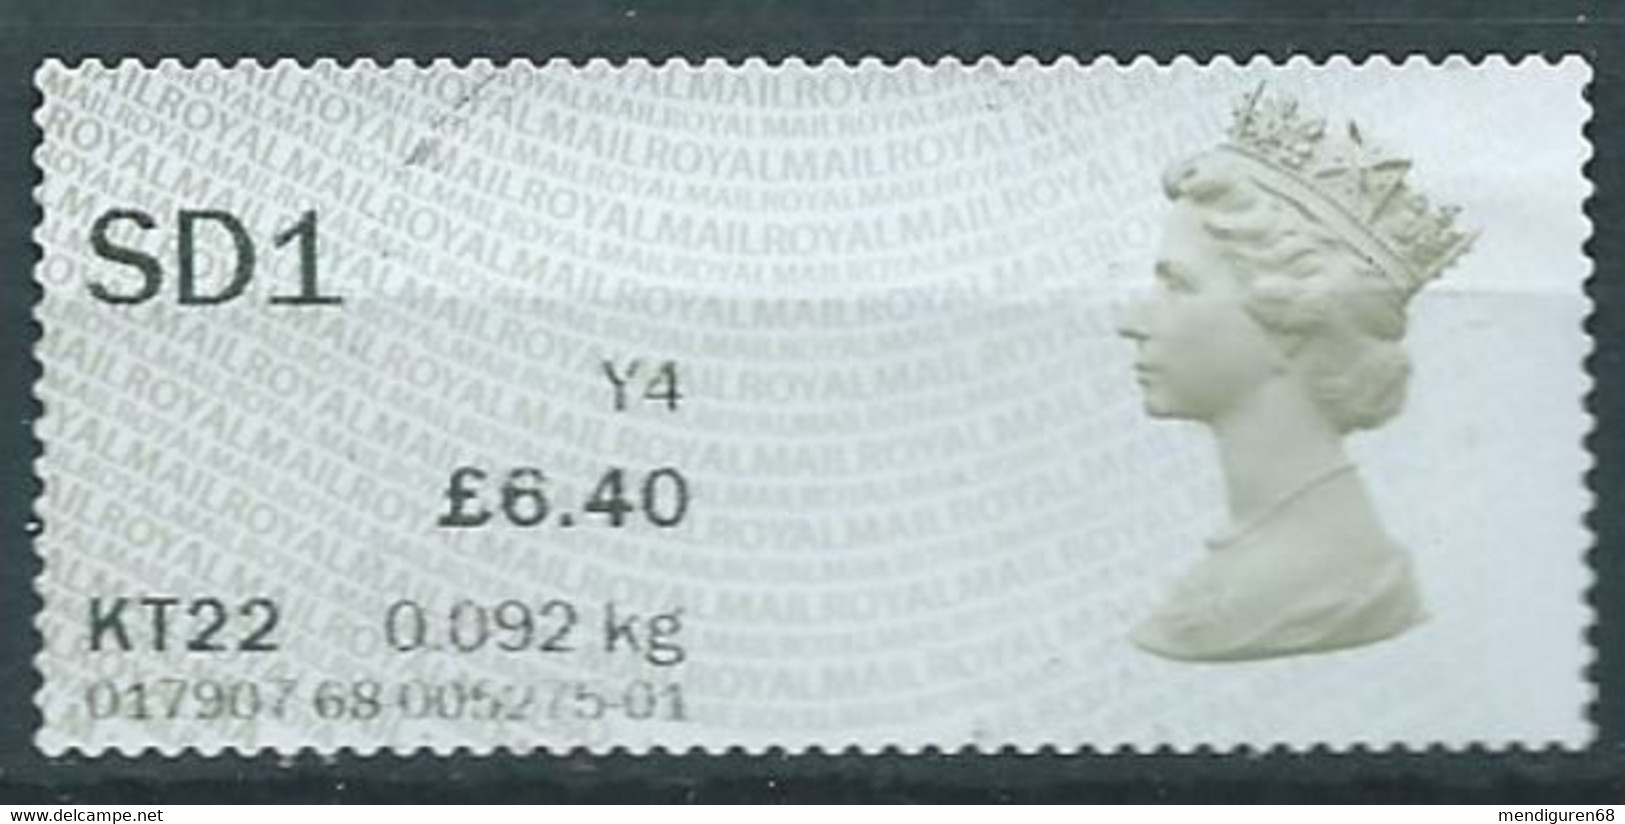 GROSBRITANNIEN GRANDE BRETAGNE GB 2015 POST&GO MACHIN EURO USED SG SD1 (Y4) - Post & Go Stamps